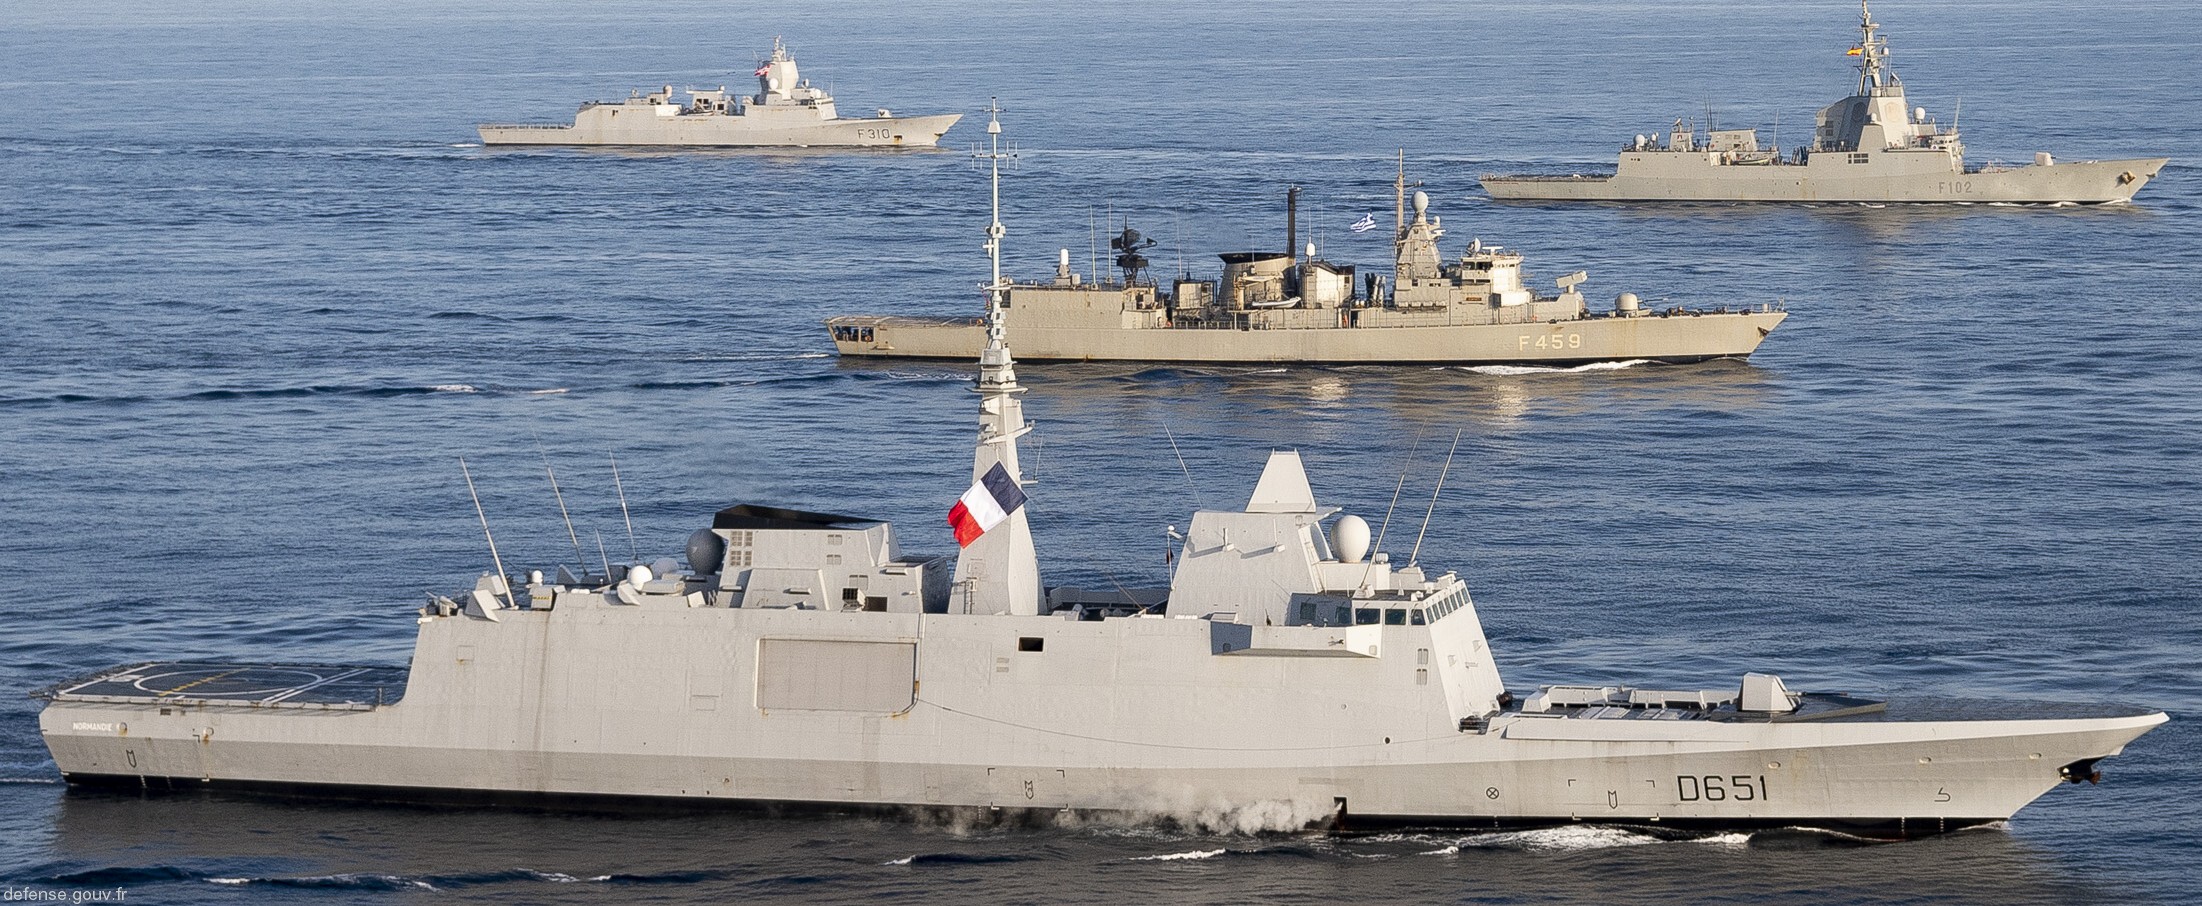 d-651 fs normandie fremm aquitaine class frigate fregate multi purpose french navy marine nationale 16